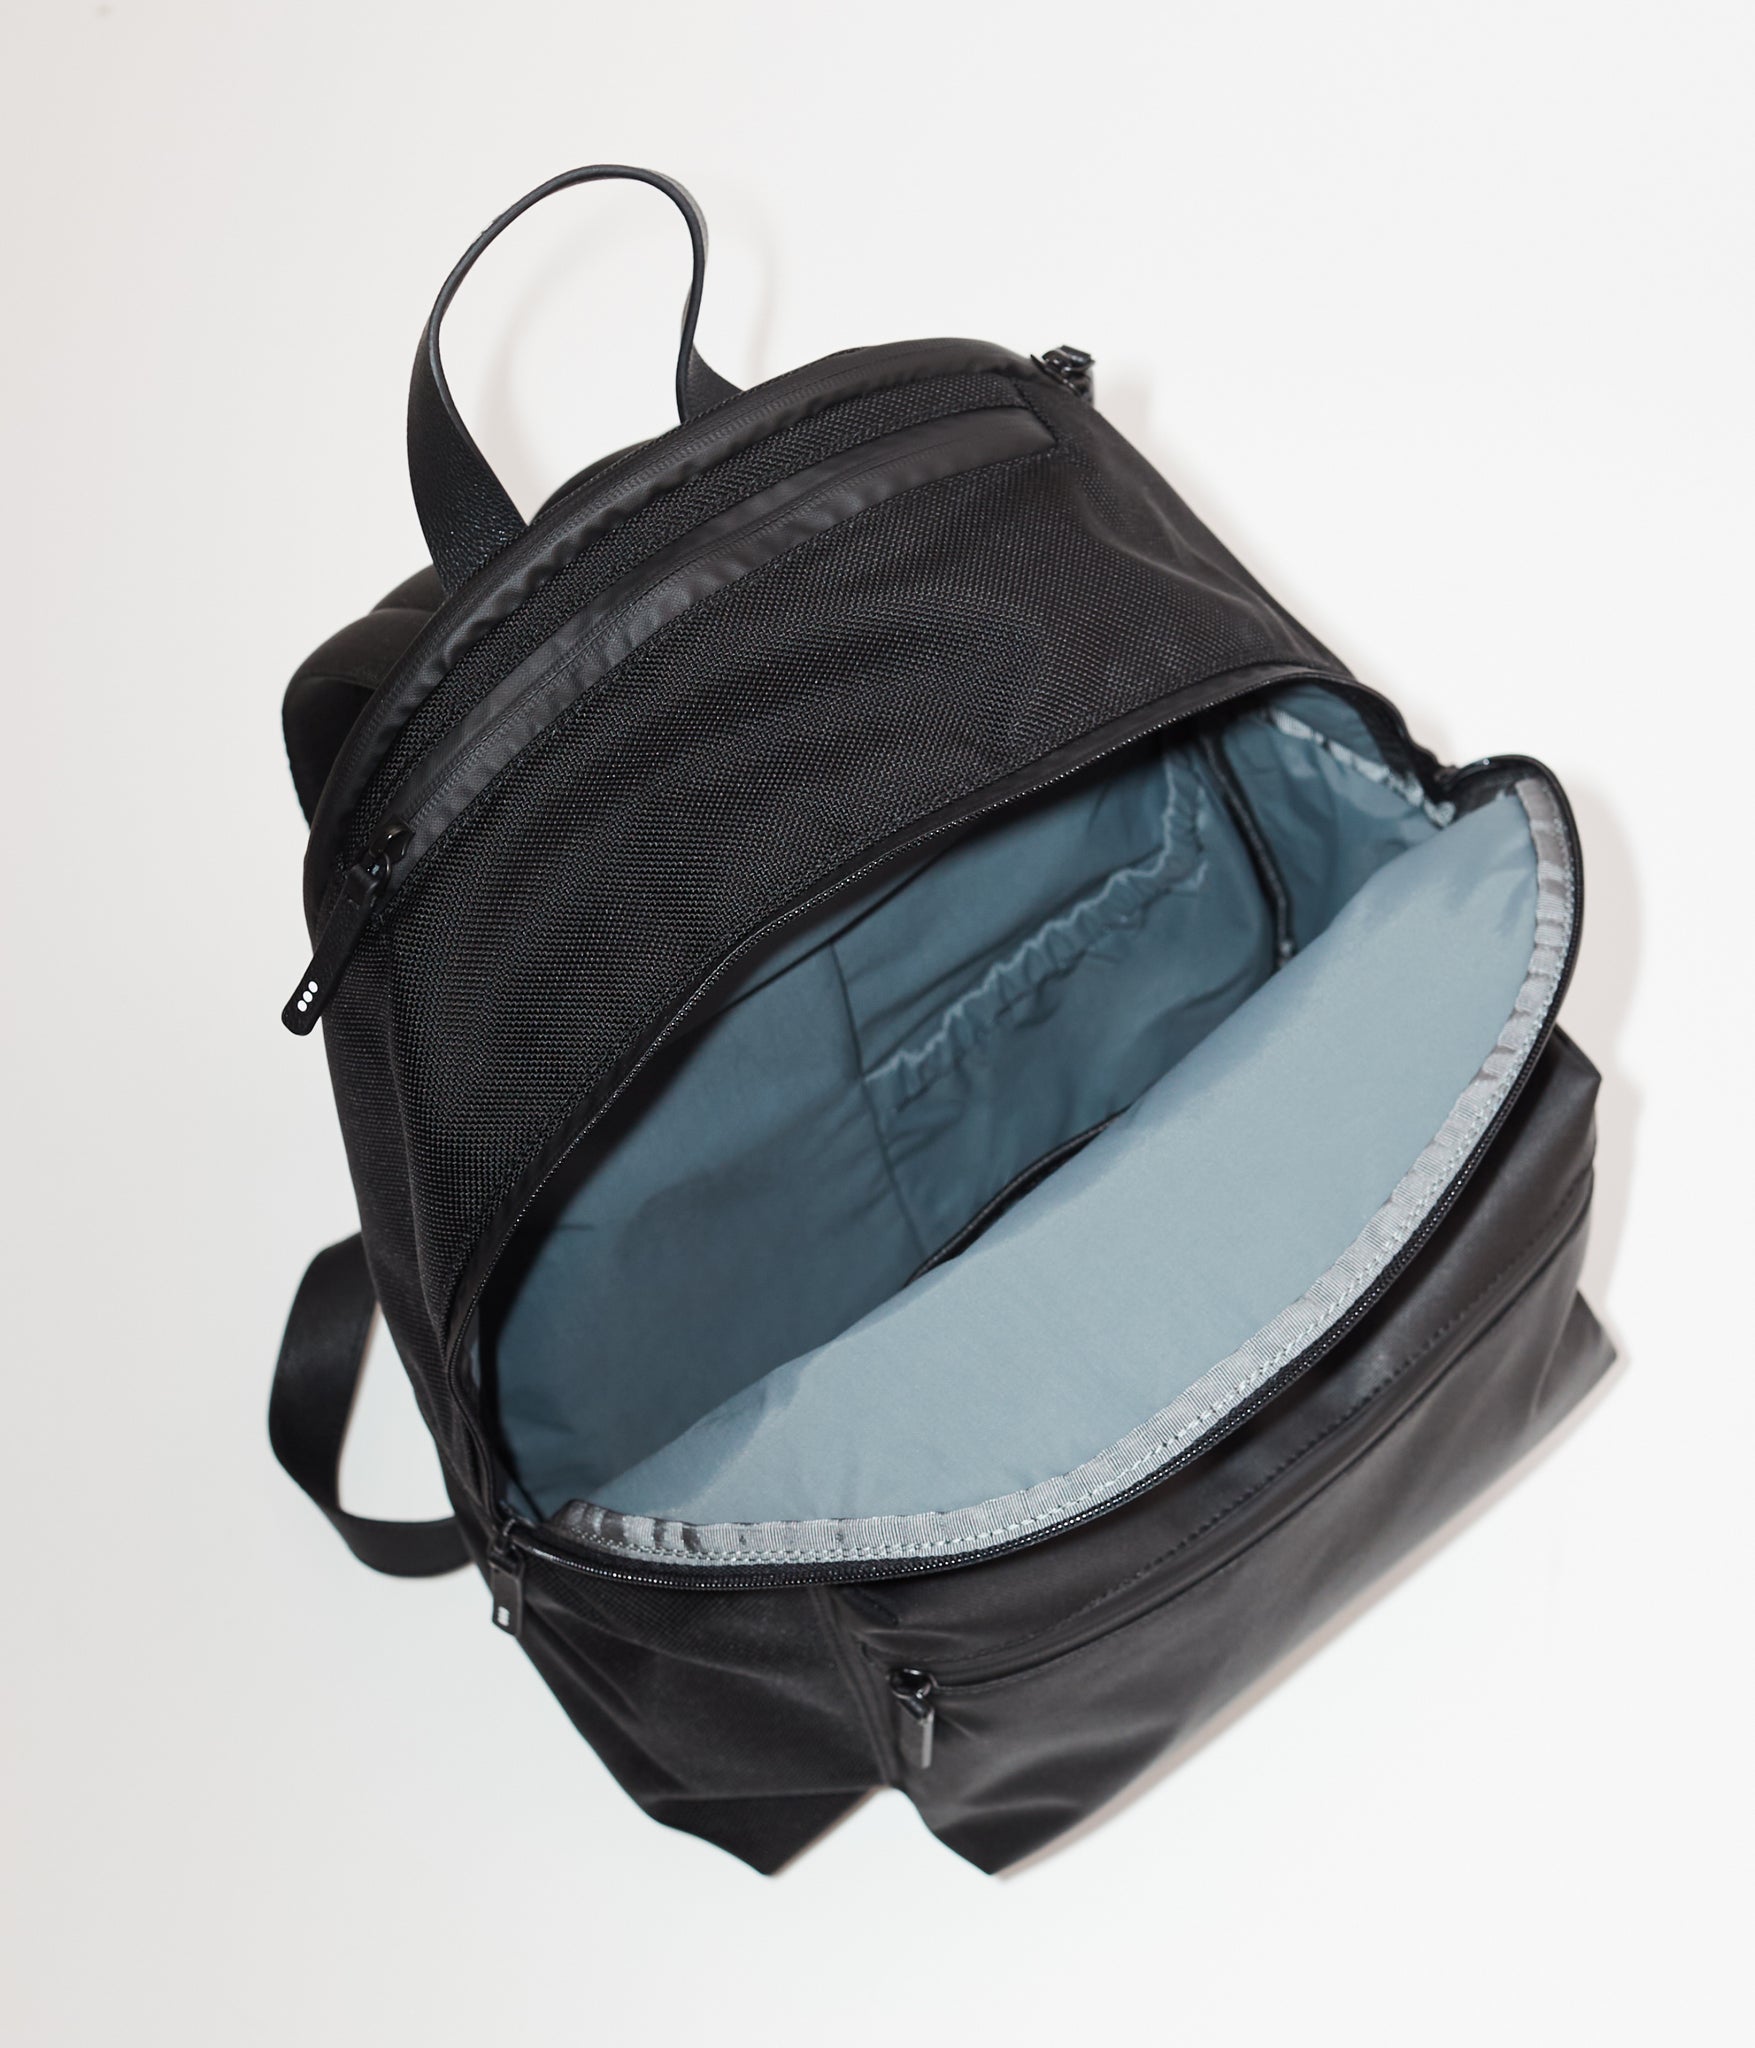 Express Backpack in Black